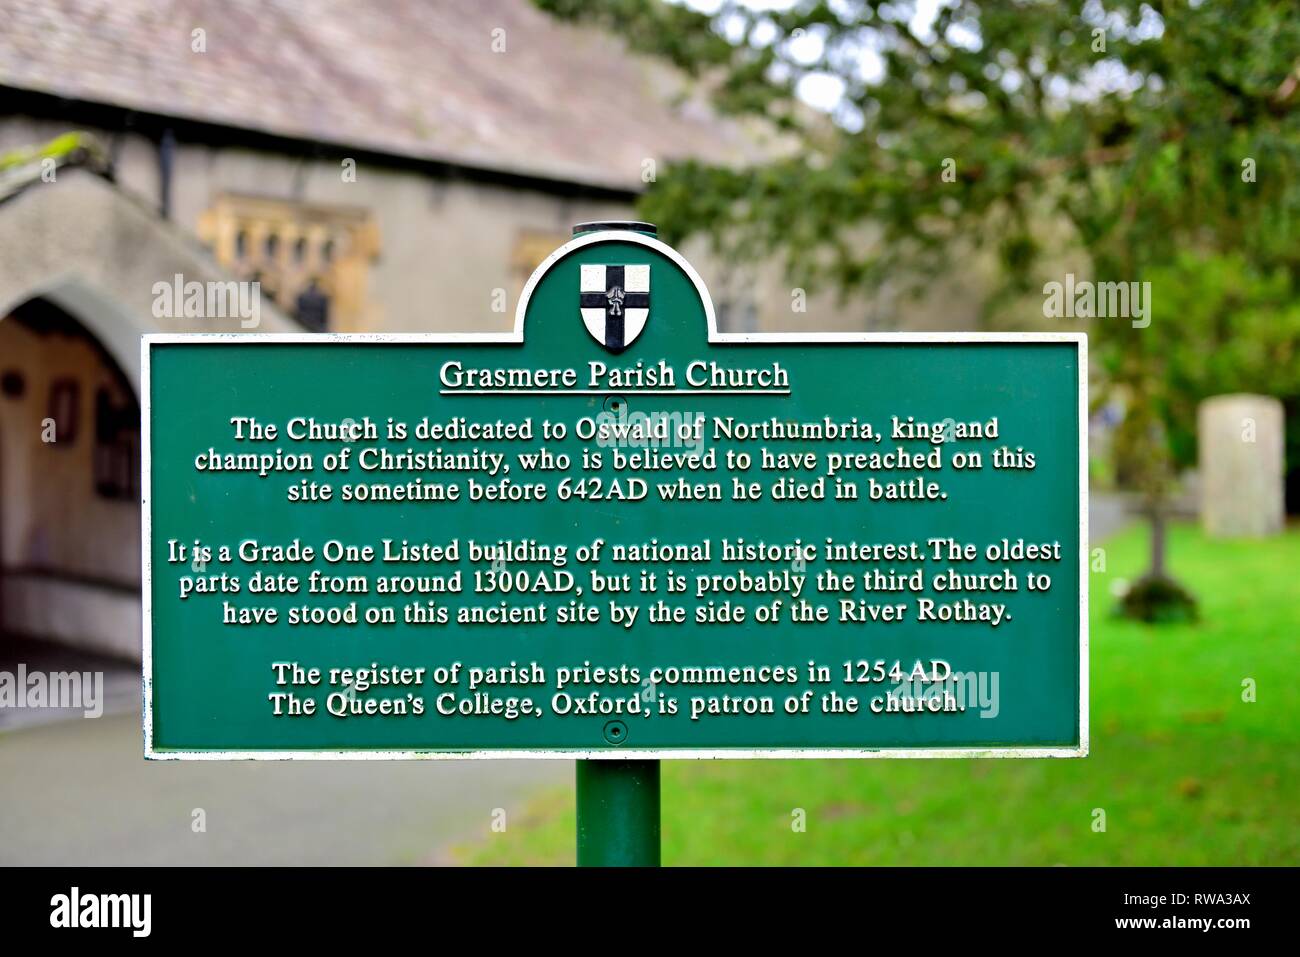 Grasmere Parish Church plaque historical information sign,Lake District,Cumbria,England,UK Stock Photo